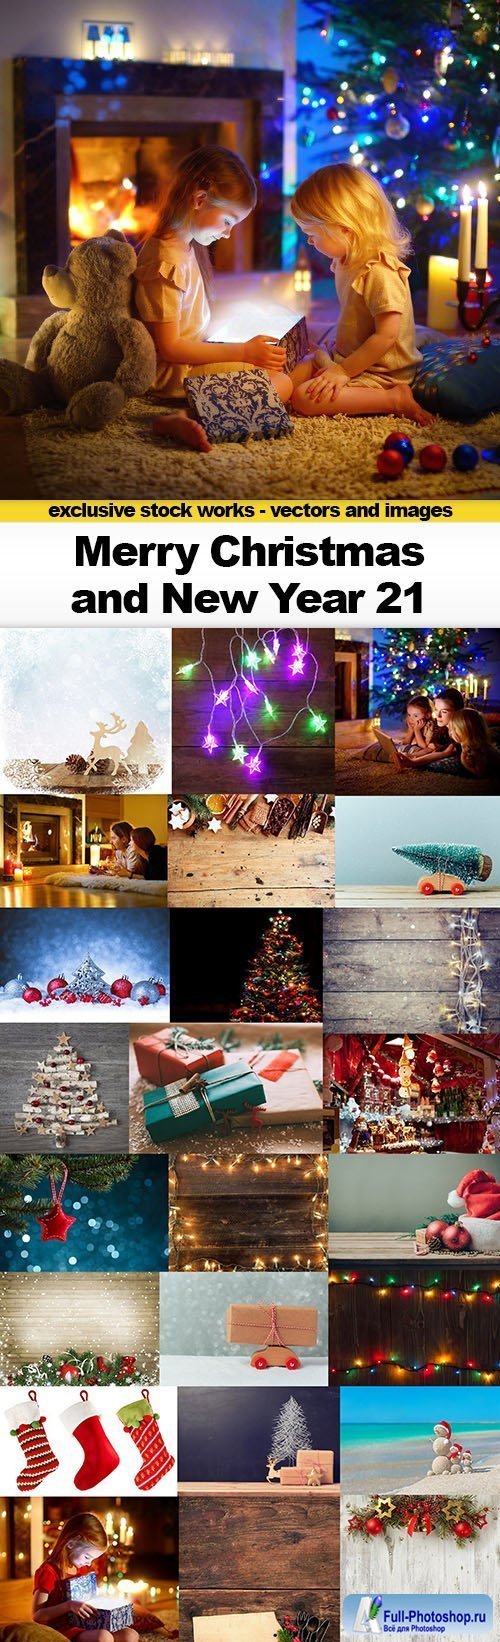 Merry Christmas & New Year 21, 25xJPG